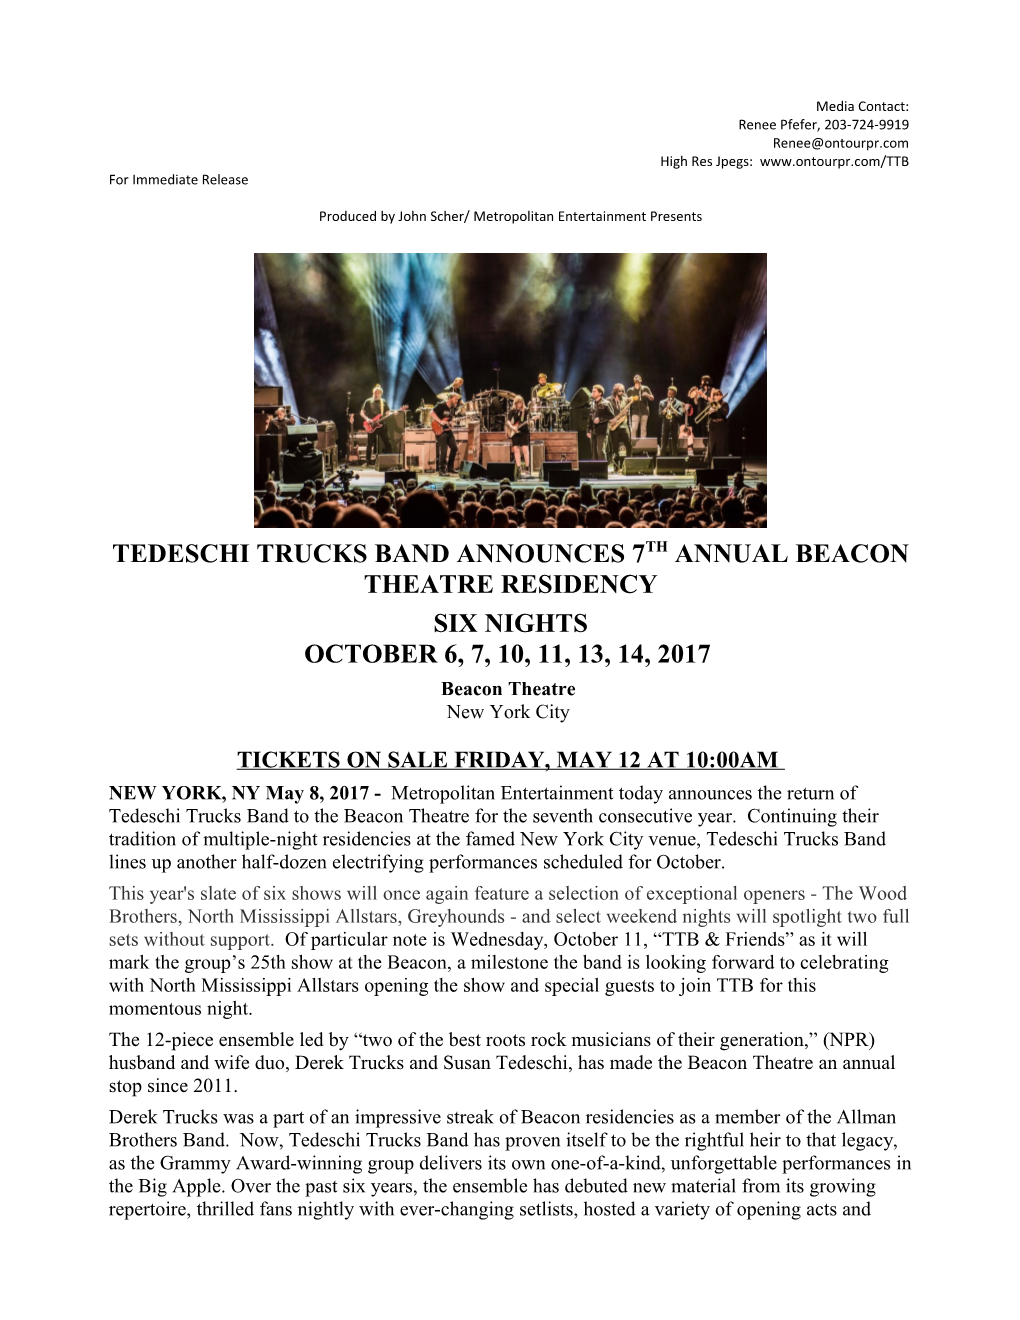 Tedeschi Trucks Band Announces 7Th Annual Beacon Theatre Residency